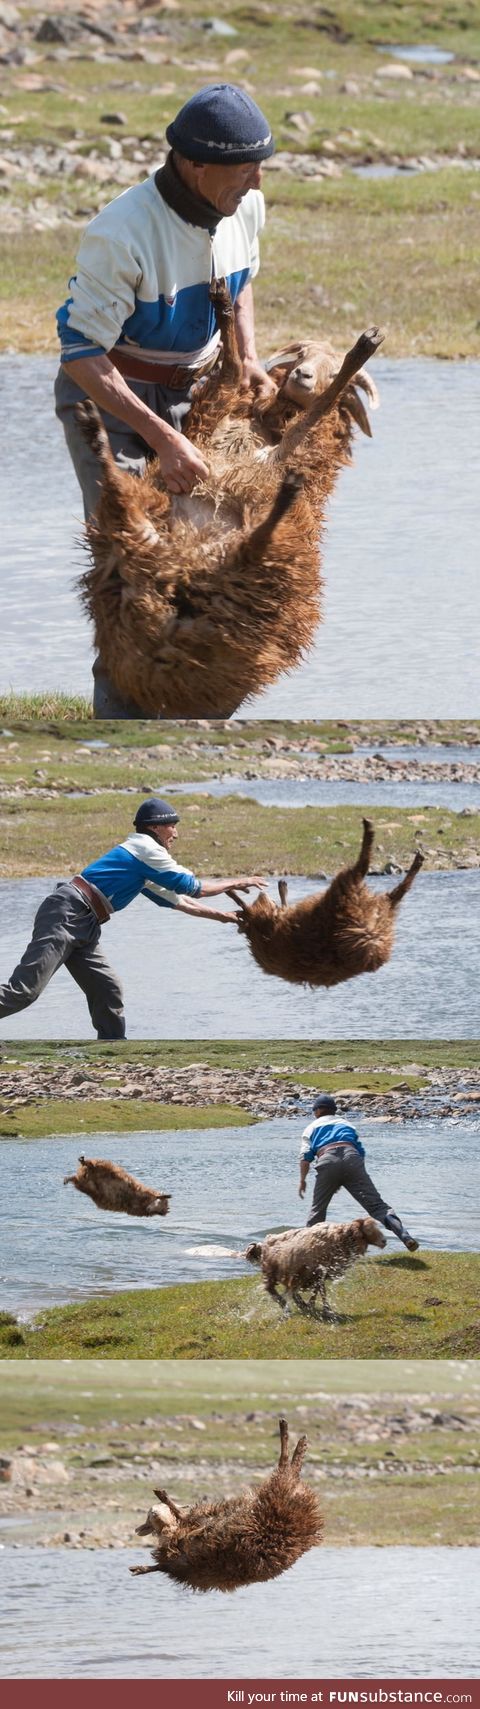 How the Mongolian bathe the sheep